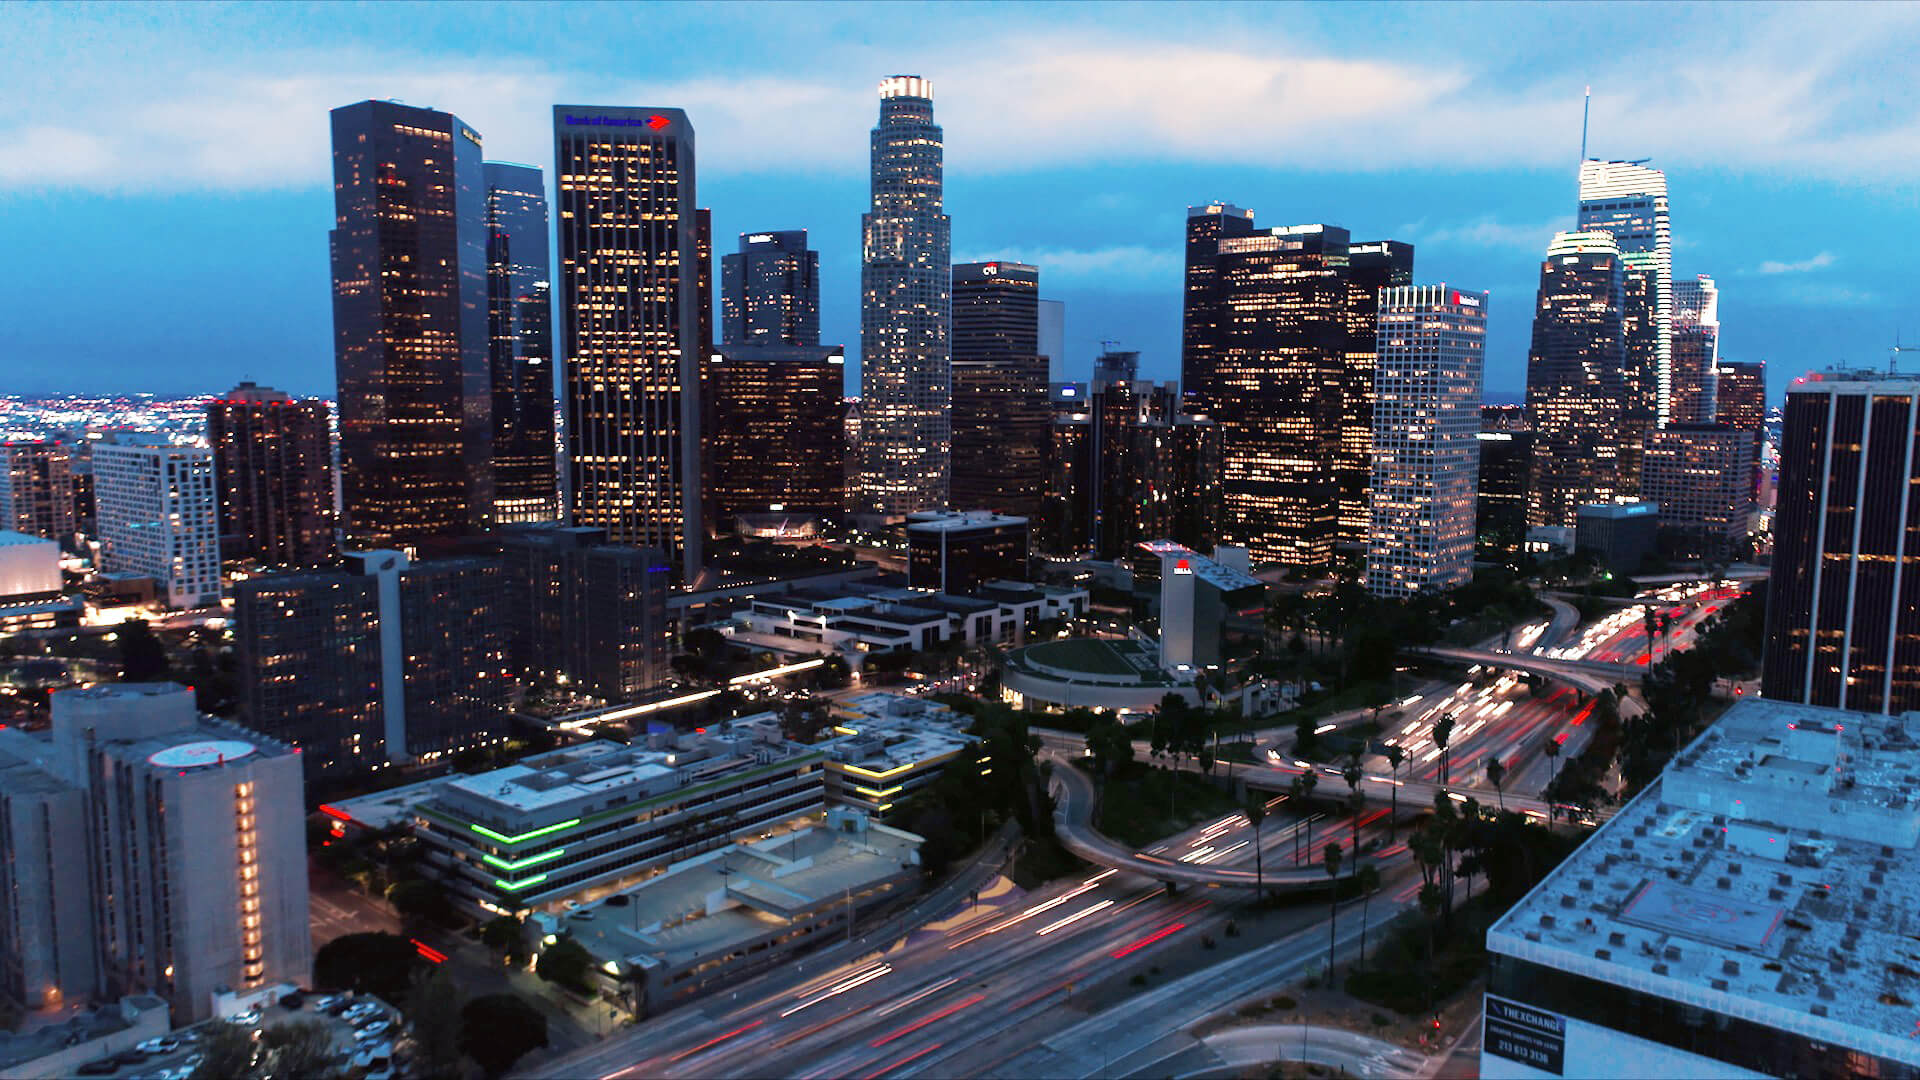 The skyline of Los Angeles at night, lit using renewabe energy.